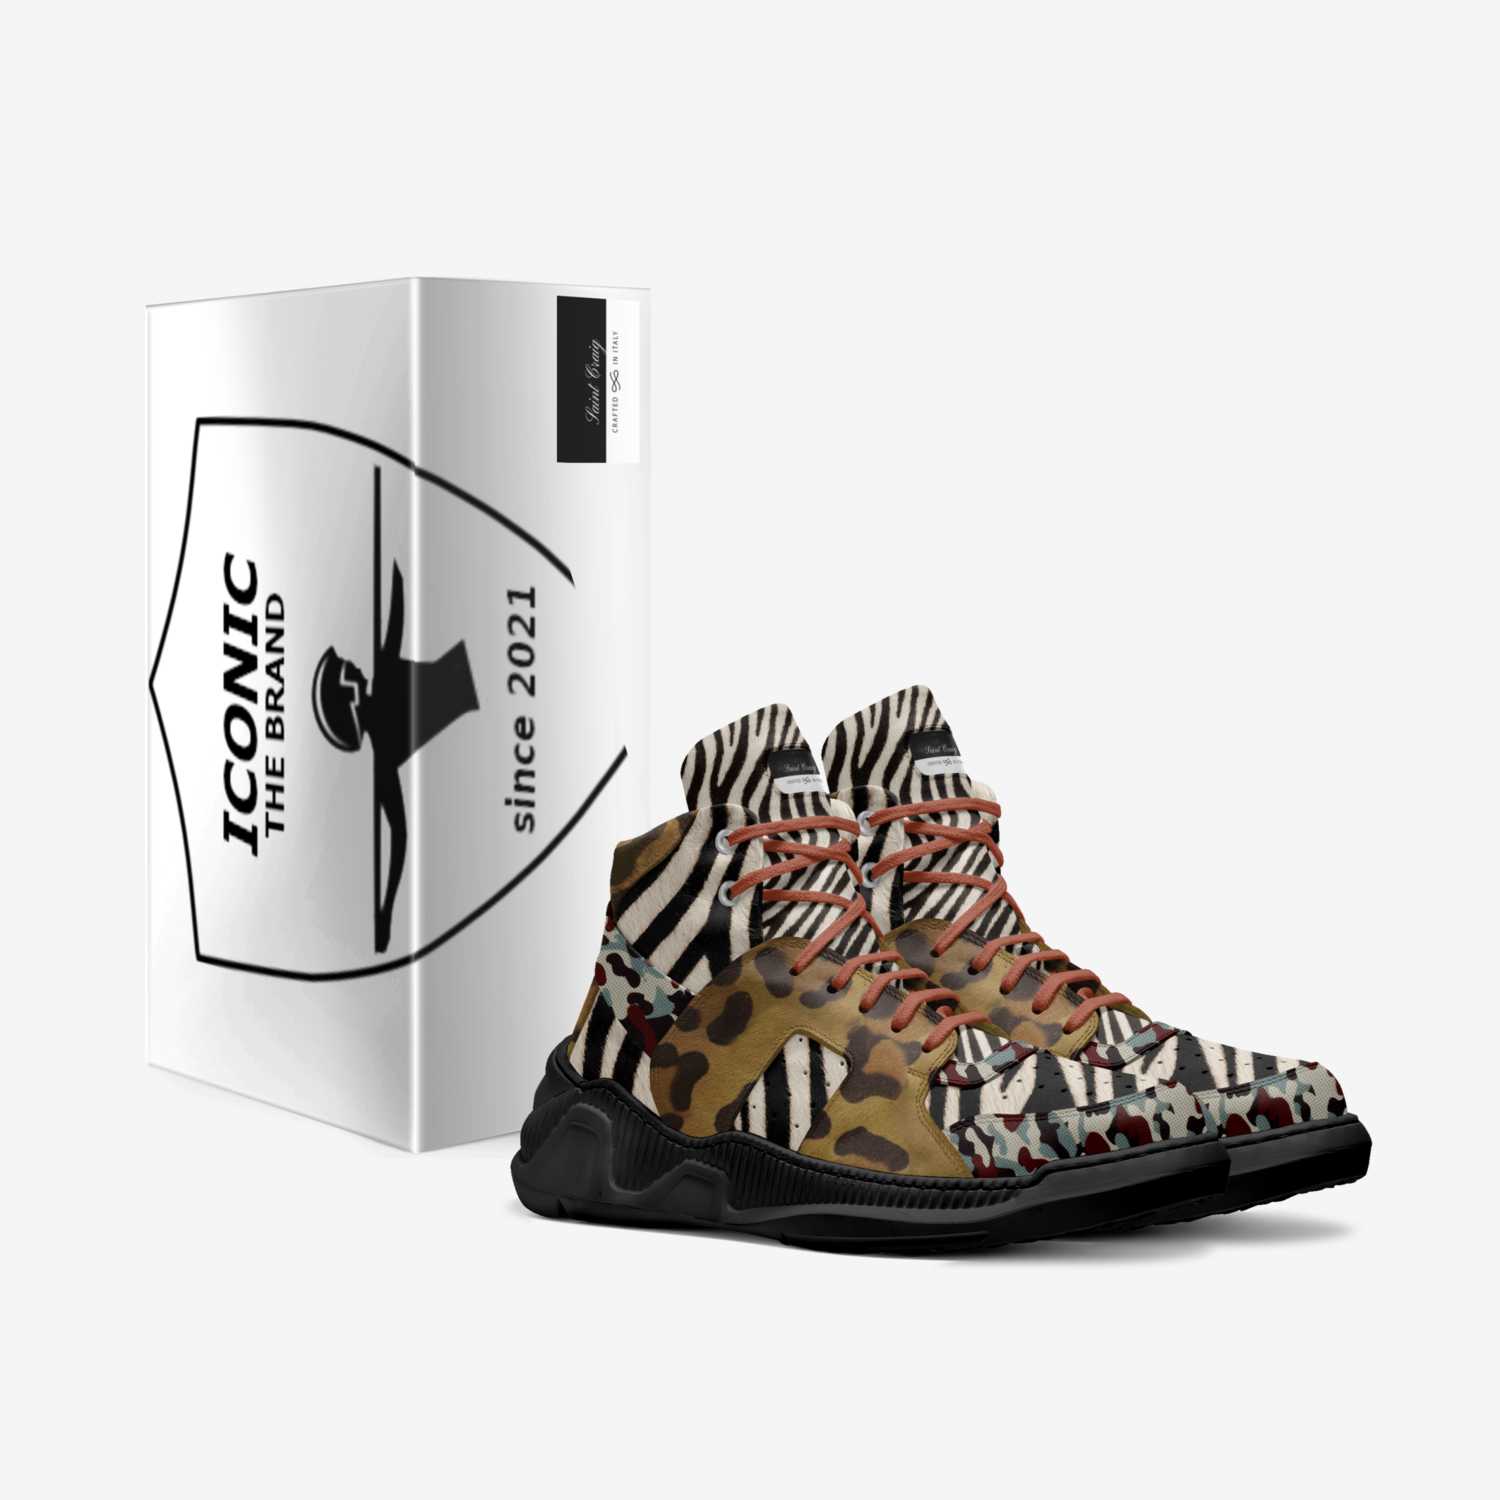 Saphari custom made in Italy shoes by Icon John | Box view